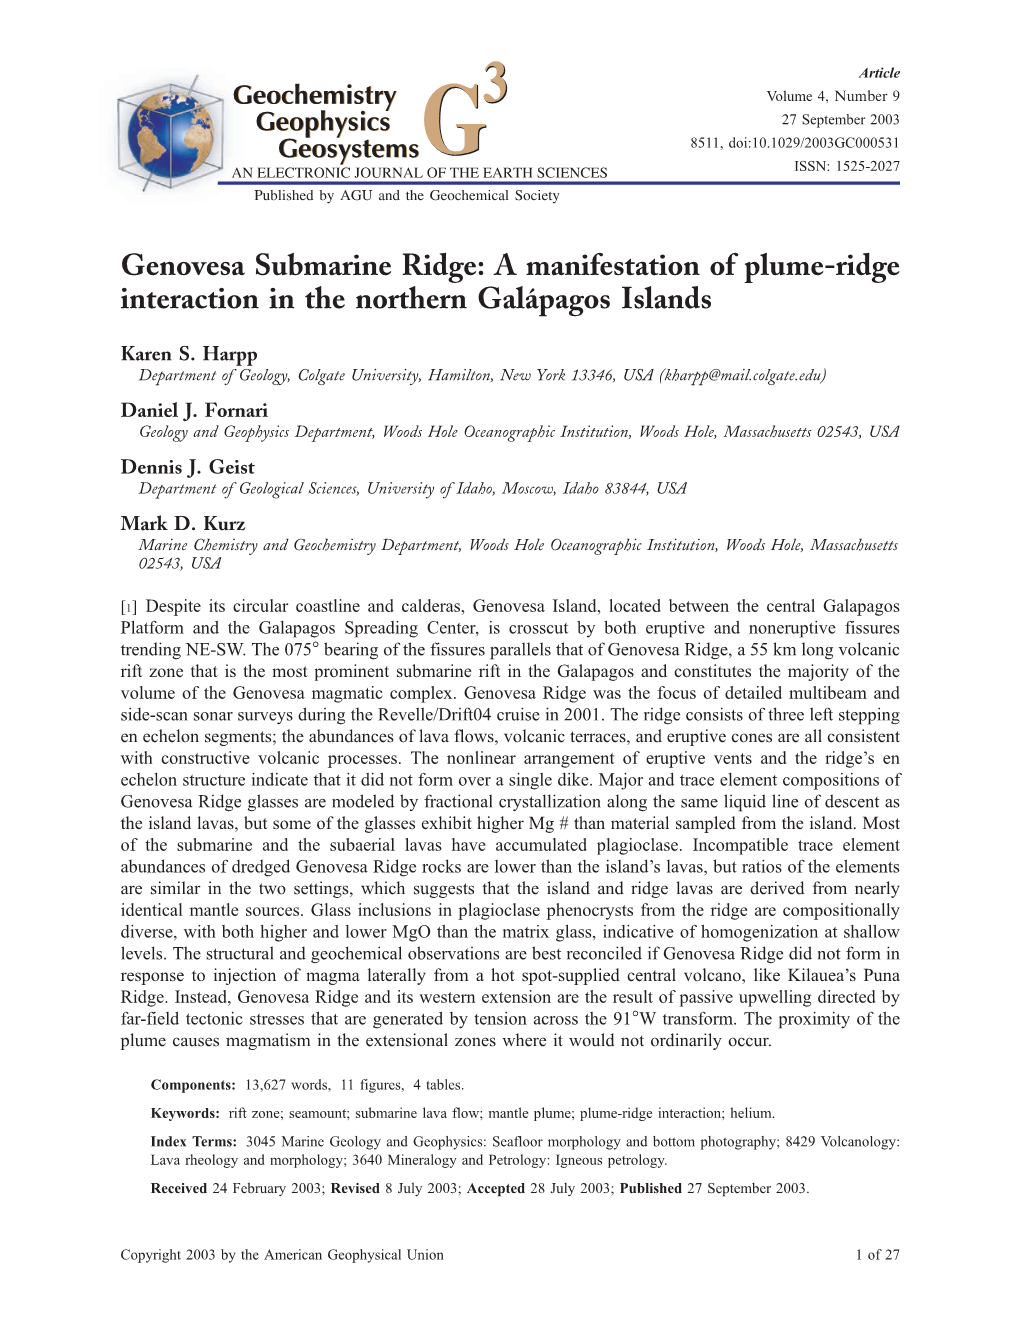 Genovesa Submarine Ridge: a Manifestation of Plume-Ridge Interaction in the Northern Gala´Pagos Islands